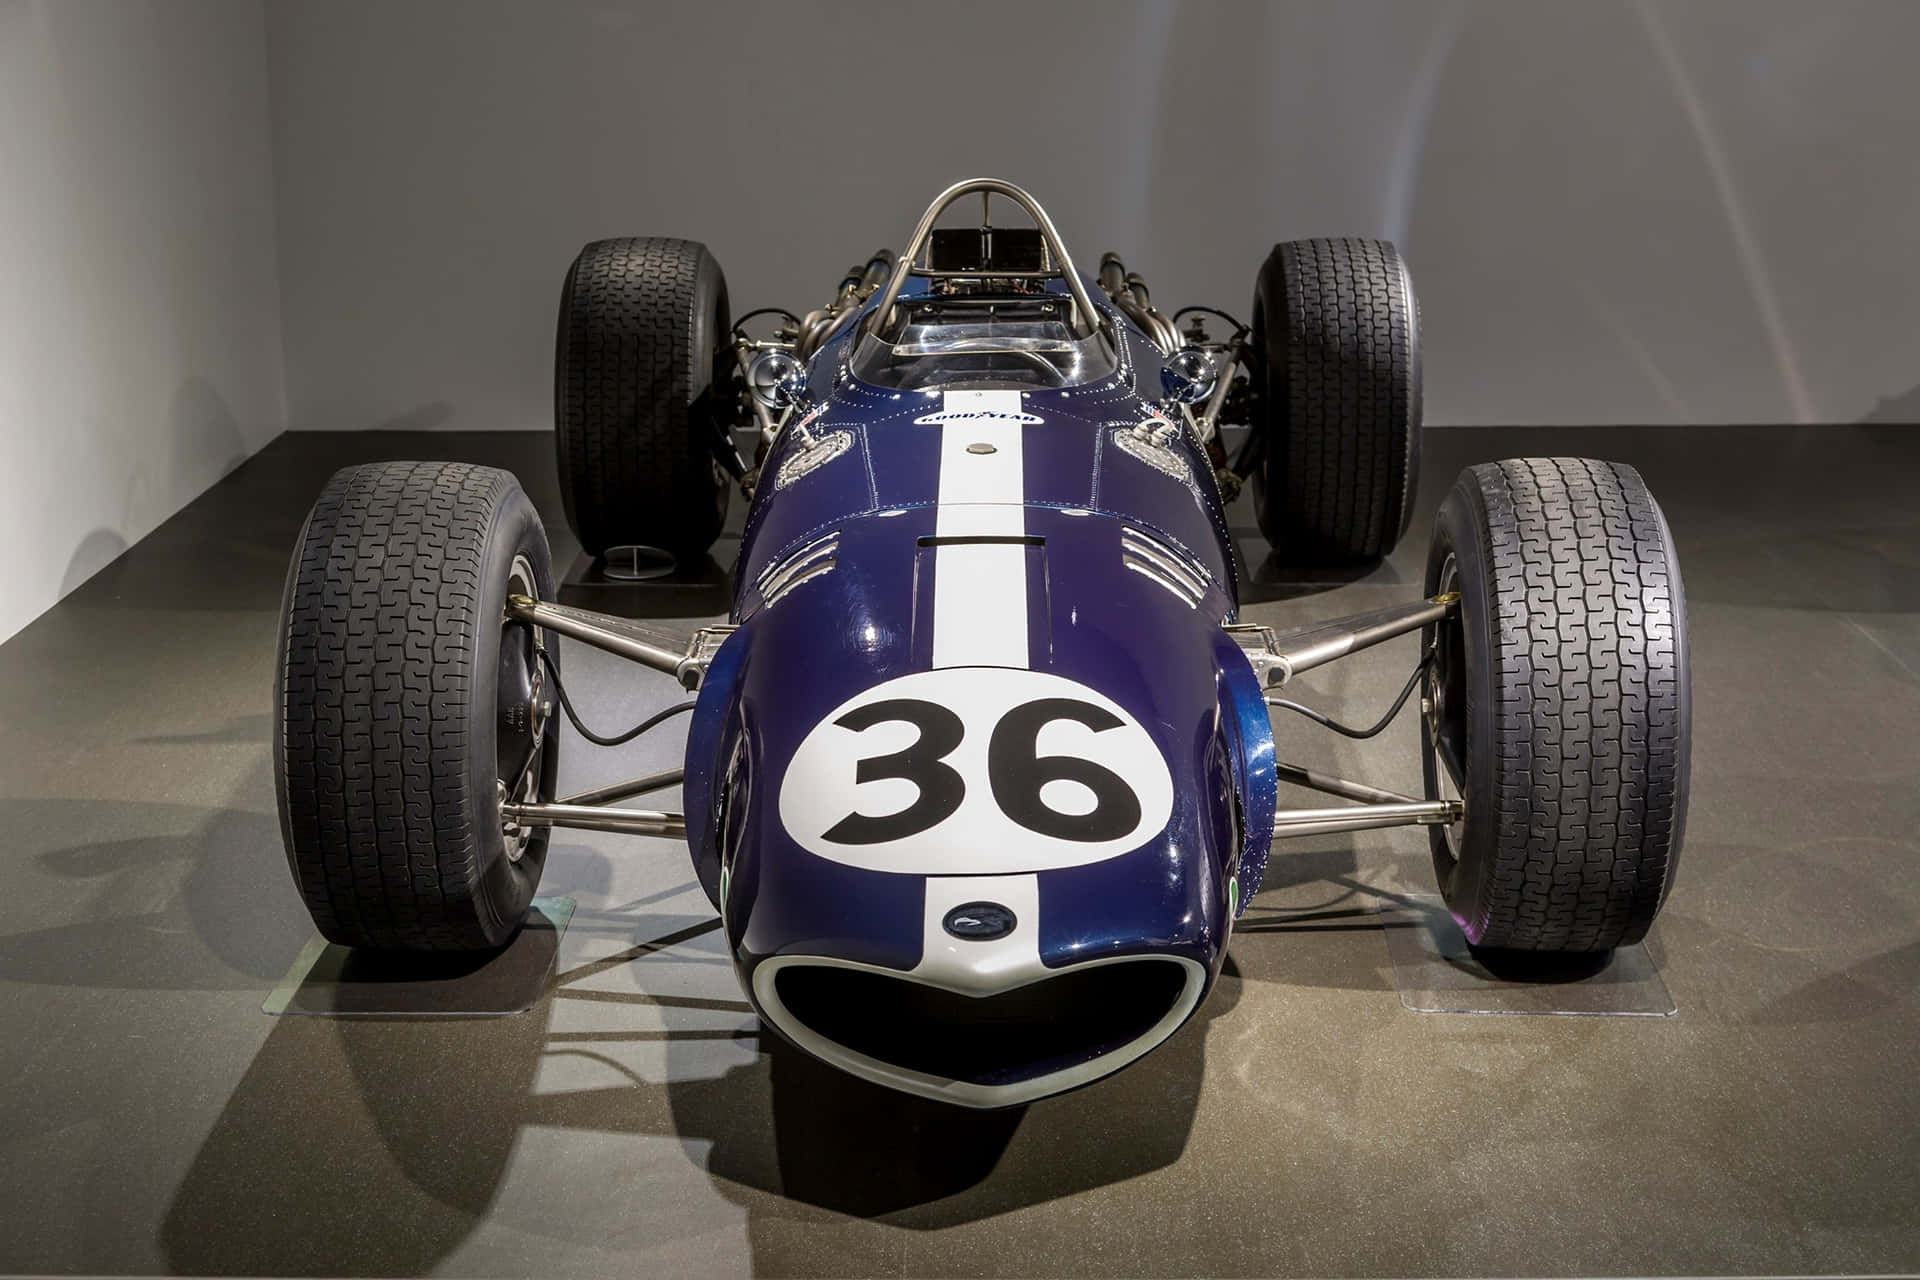 Vintage Blue Racing Car Number36 Wallpaper